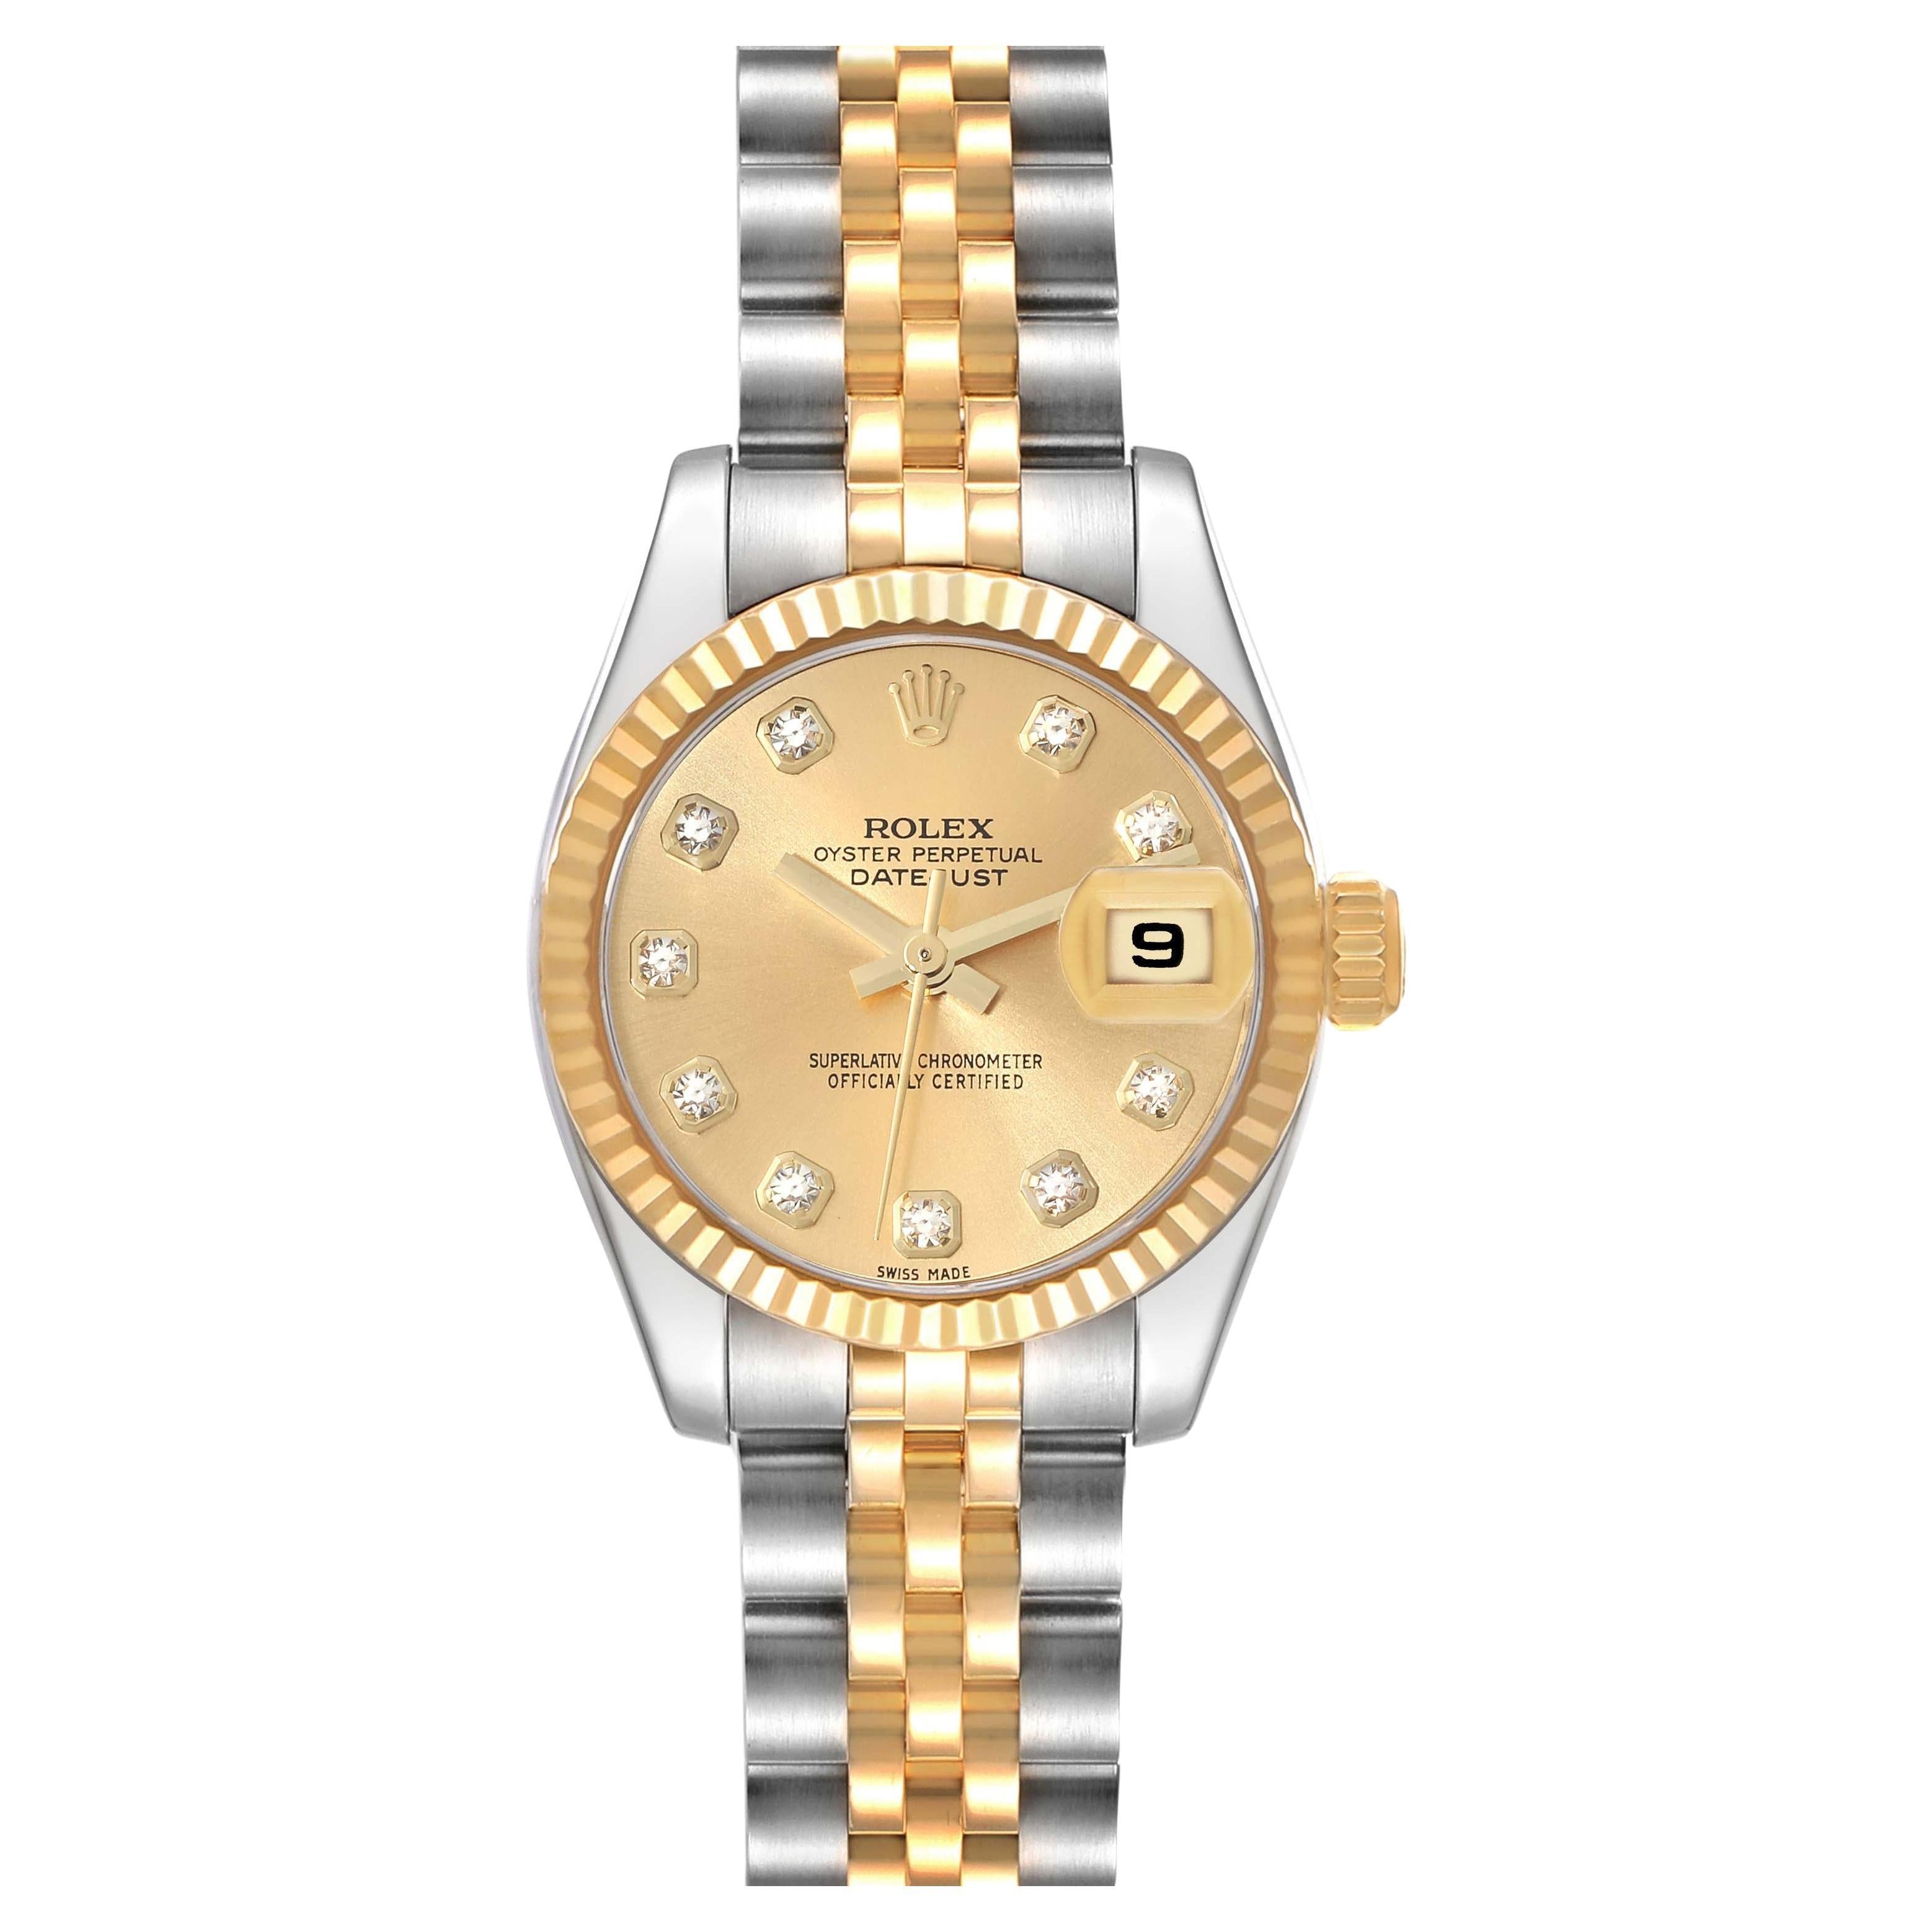 Rolex Datejust Steel Yellow Gold Diamond Dial Ladies Watch 179173